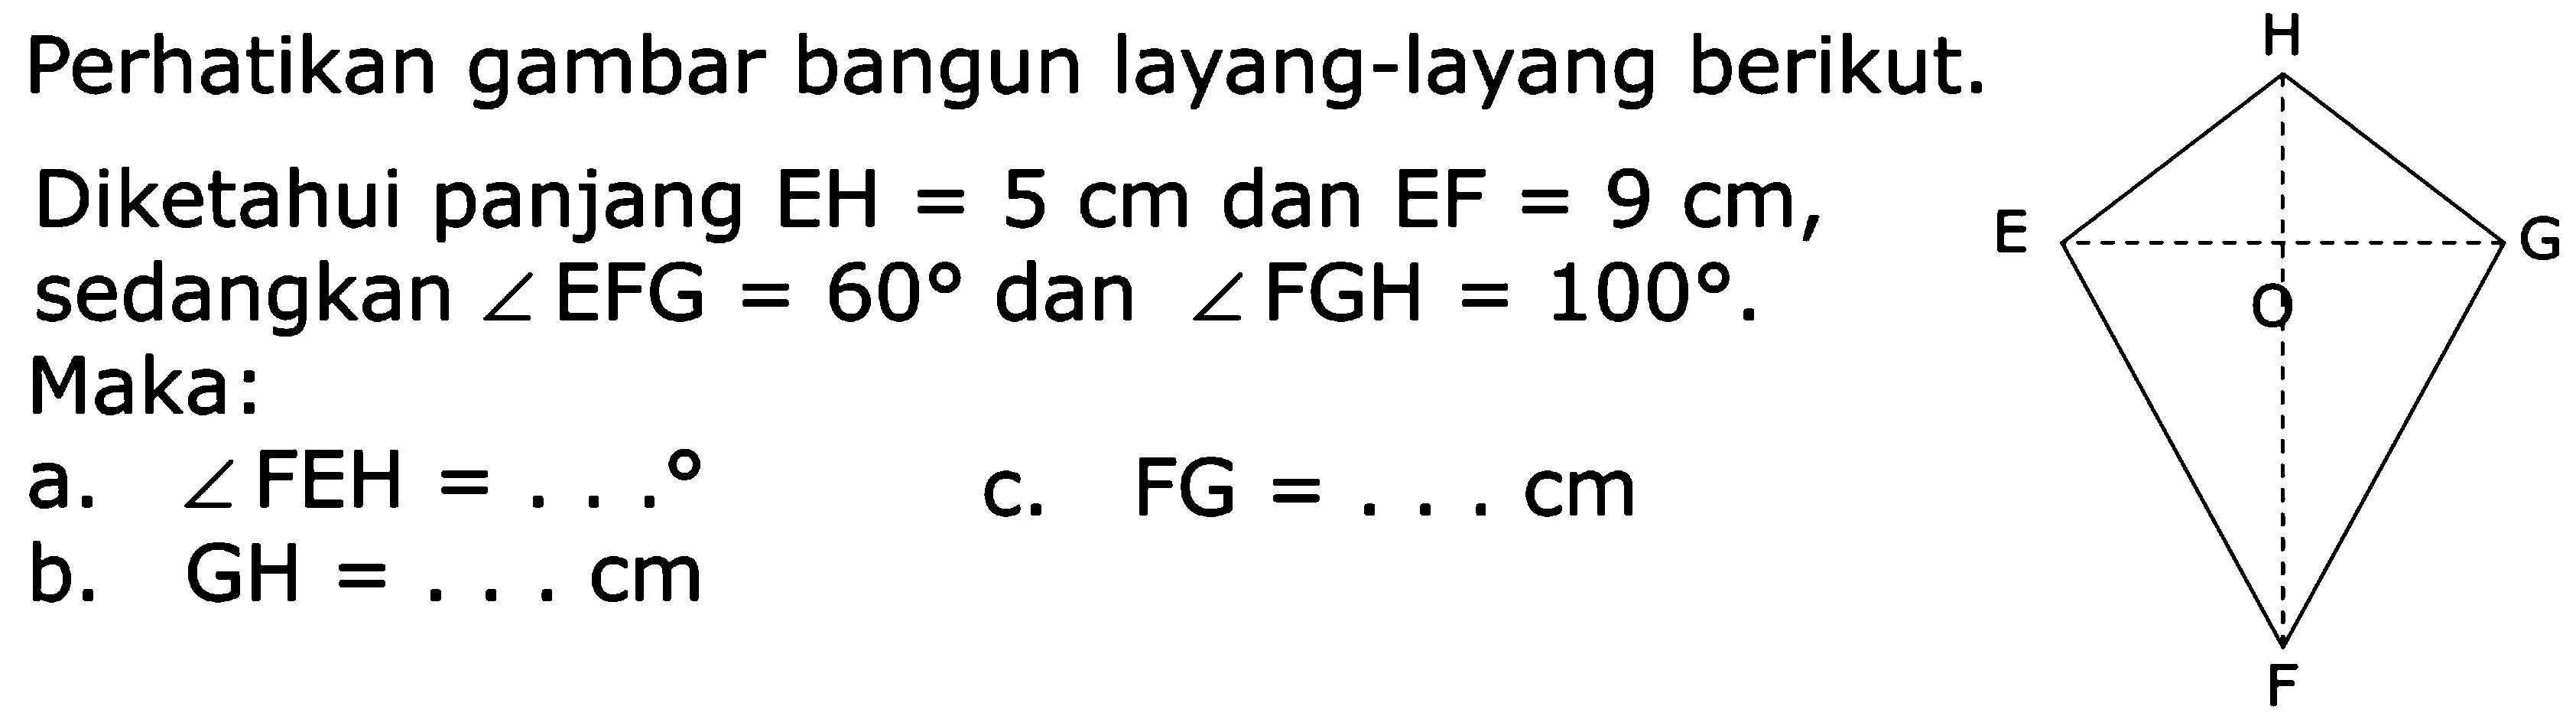 Perhatikan gambar bangun layang-layang berikut. Diketahui panjang EH = 5 cm dan EF = 9 cm, sedangkan sudut EFG = 60 dan sudut FGH = 100. Maka: a. sudut FEH = ... b. GH = ... cm c. FG = ... cm